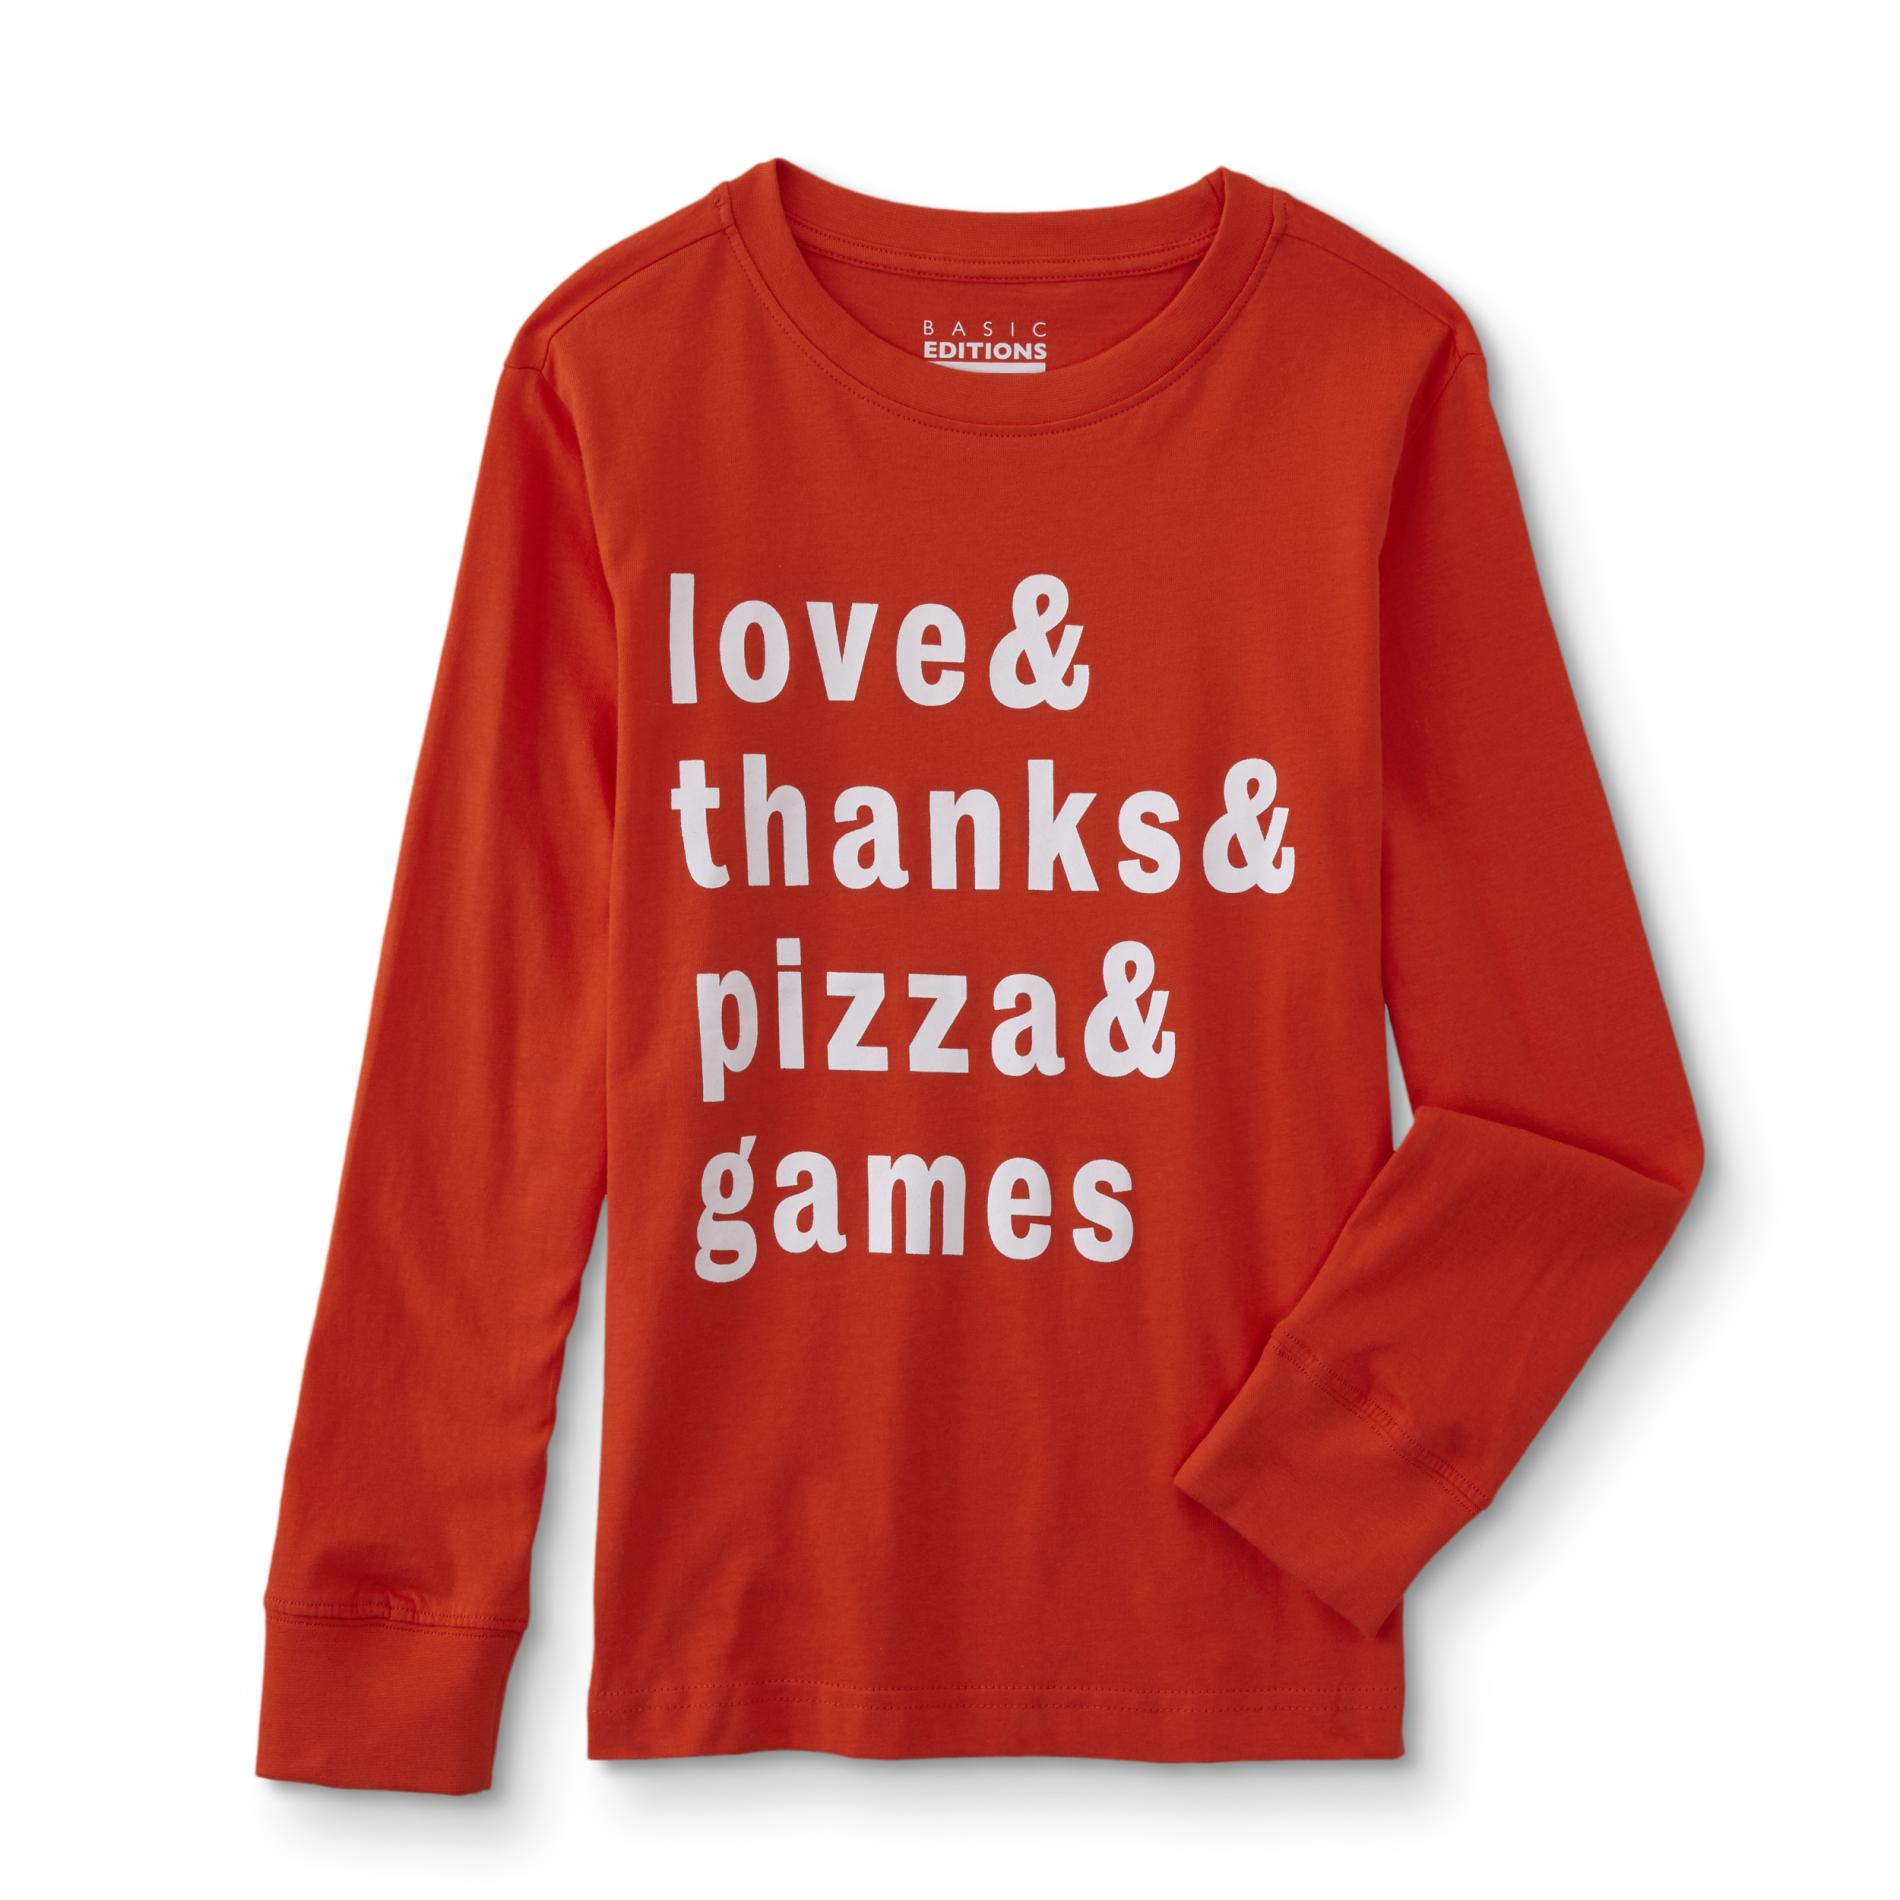 Basic Editions Boys' Long-Sleeve T-Shirt - Pizza Thanks